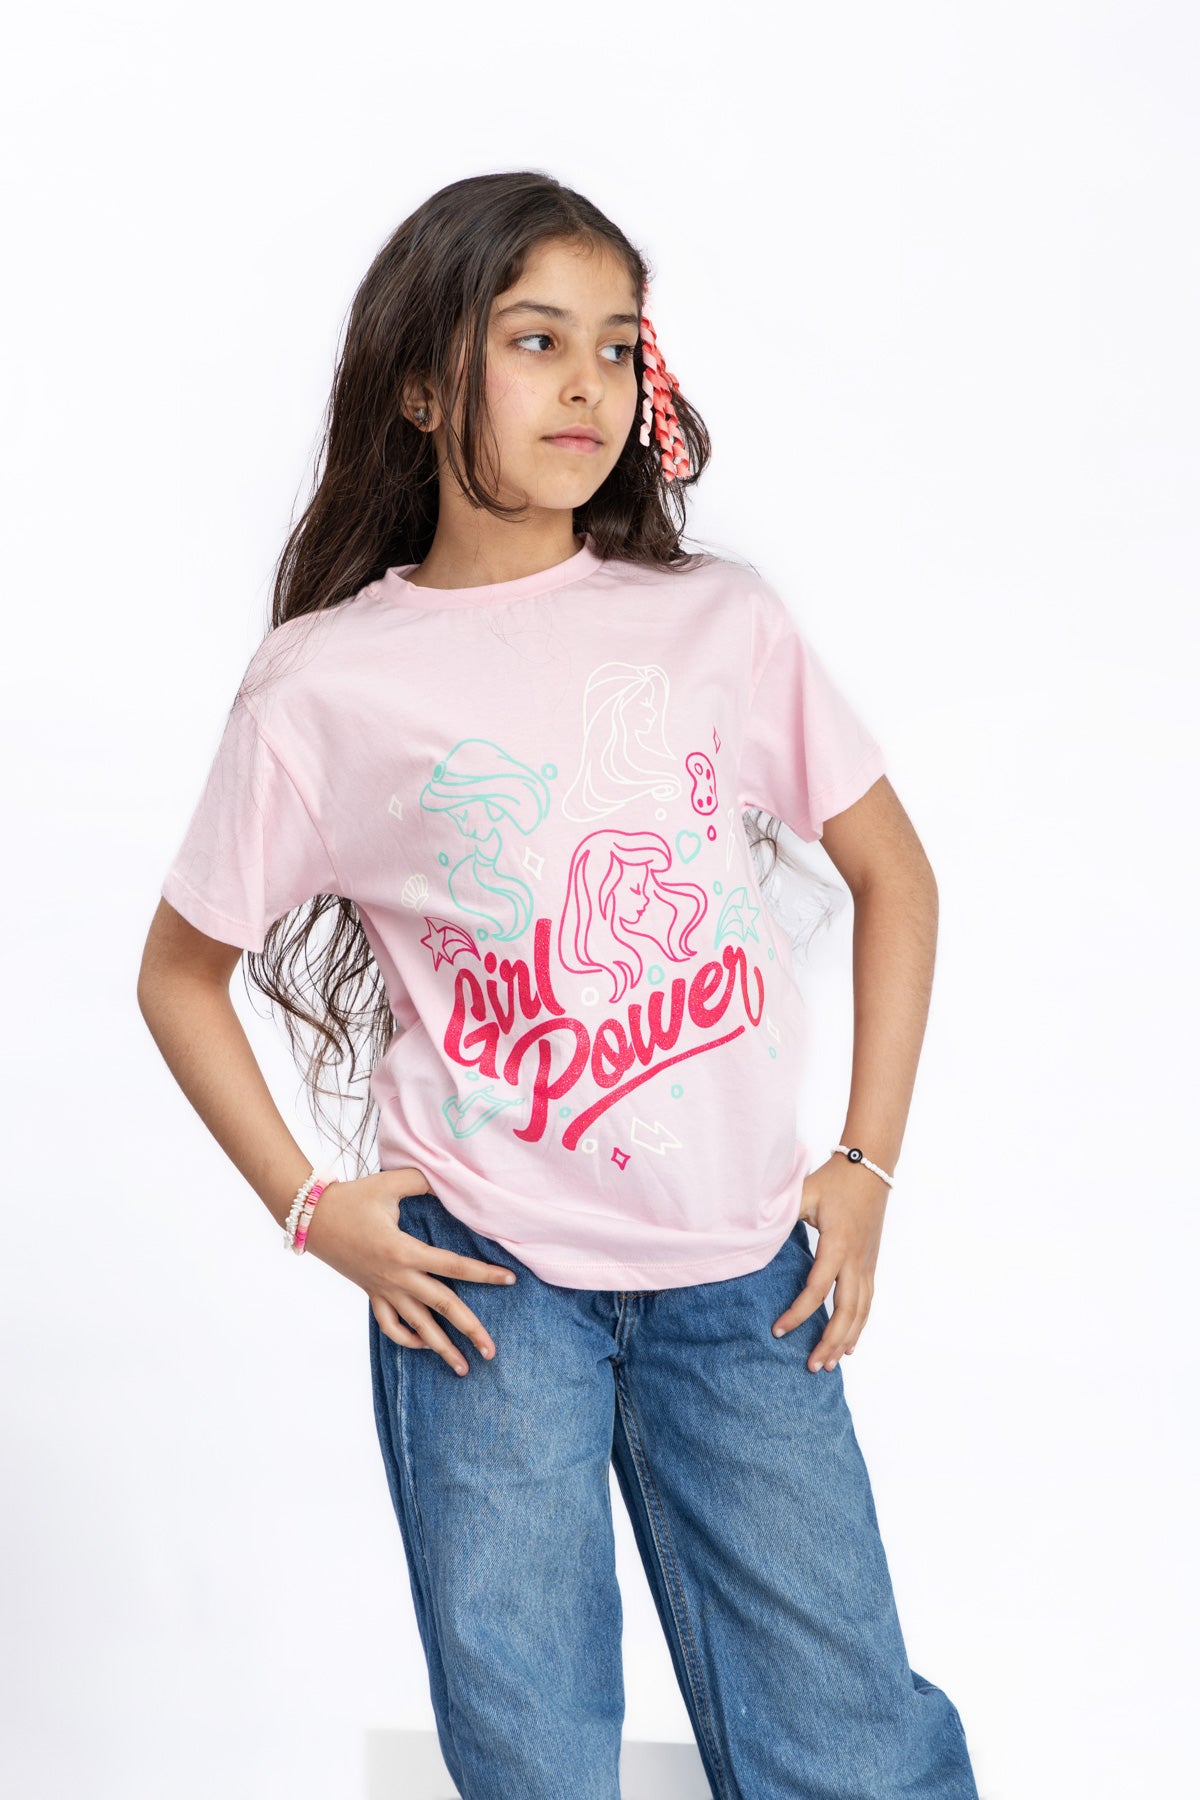 T-Shirt Girls Princess 7420